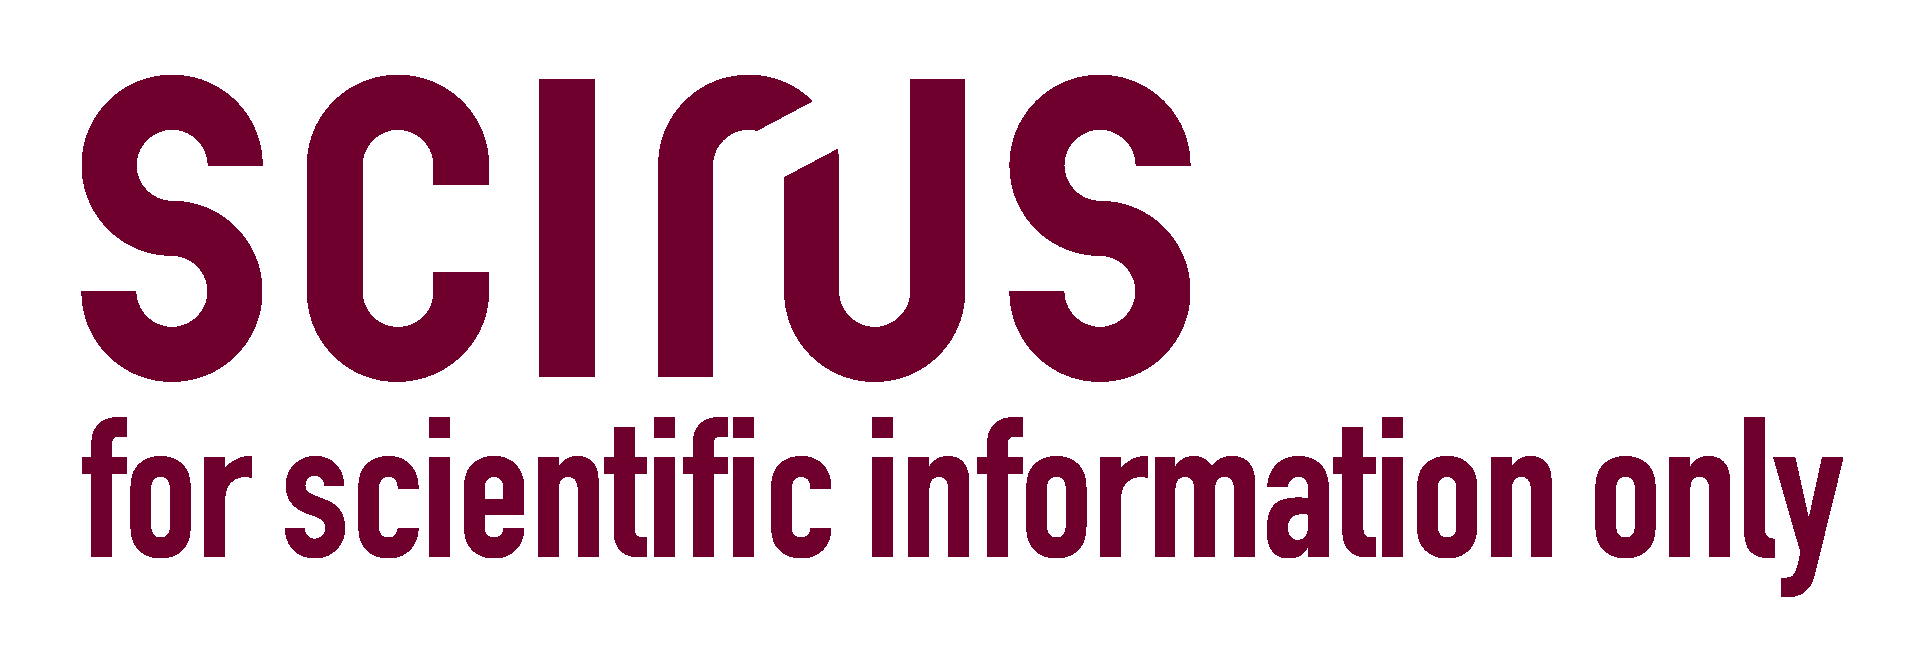 Scirus, the science-focused search engine image